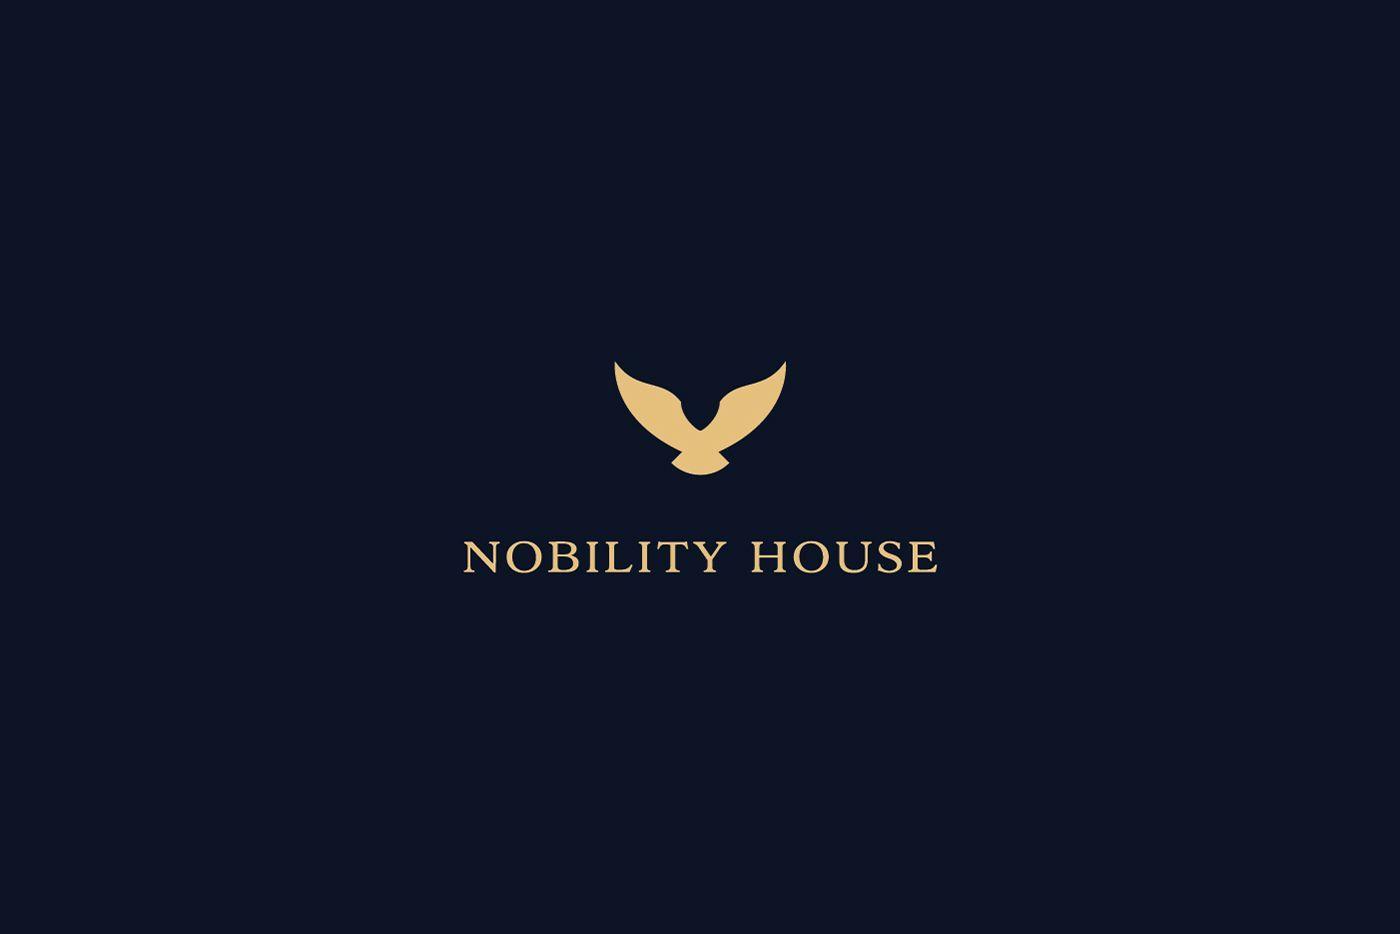 Nobility Logo - Nobility House on Behance | Logo Design | Home design plans, Logos ...